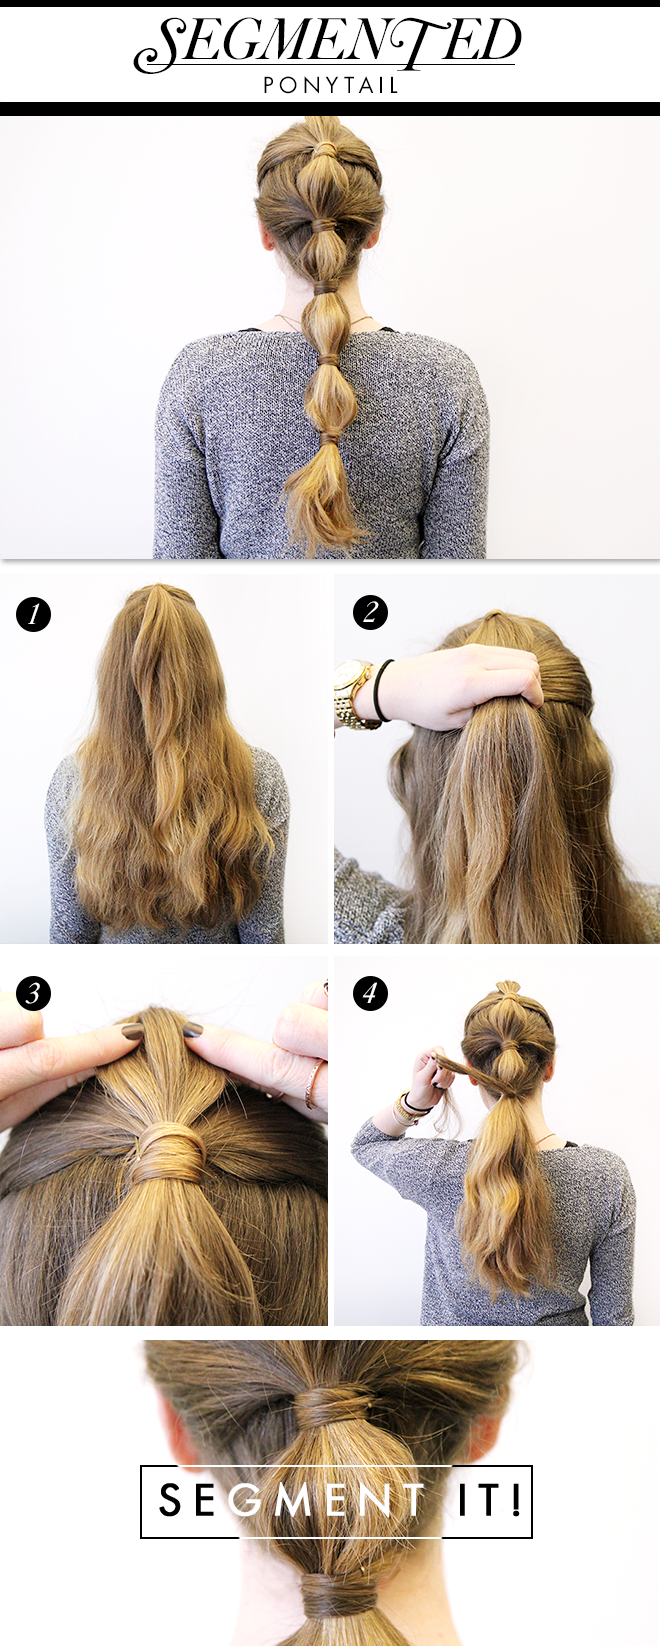 Cut off bangs - 15 ways to make cute ponytails